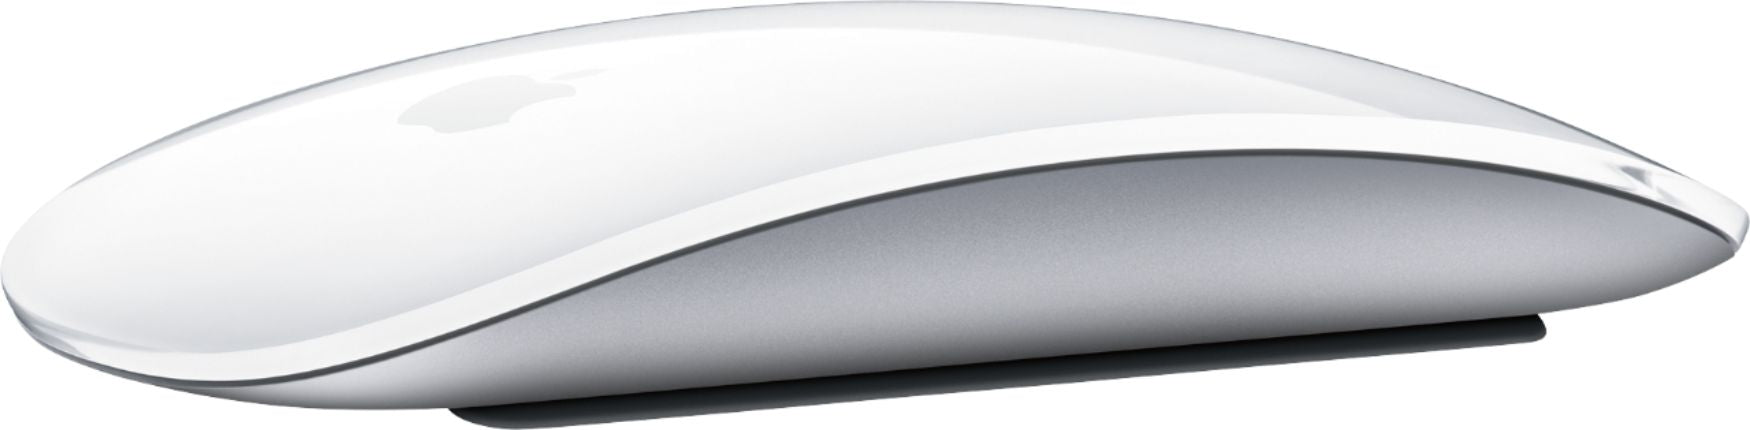 Apple - MLA02LL/A Magic Mouse 2 - Silver